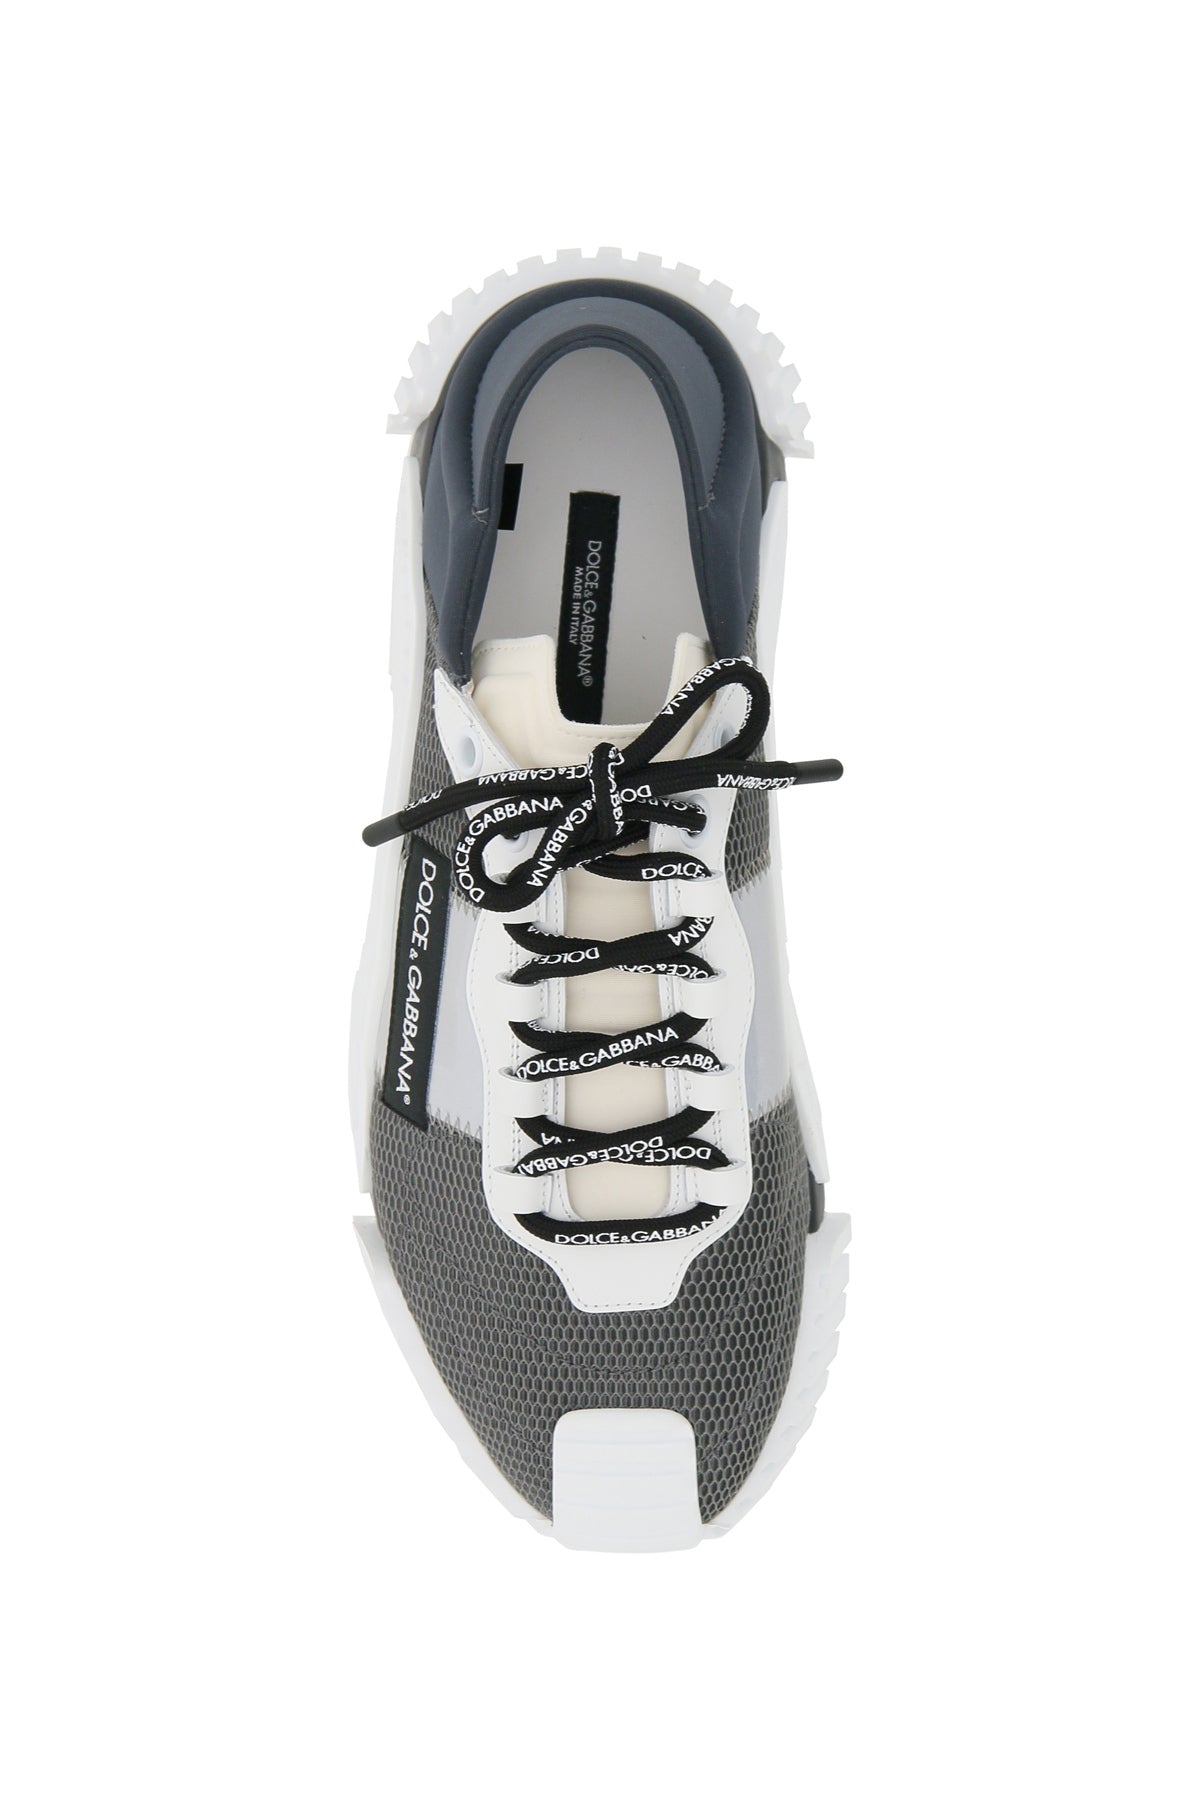 Dolce & Gabbana Ns1 Sneakers   White